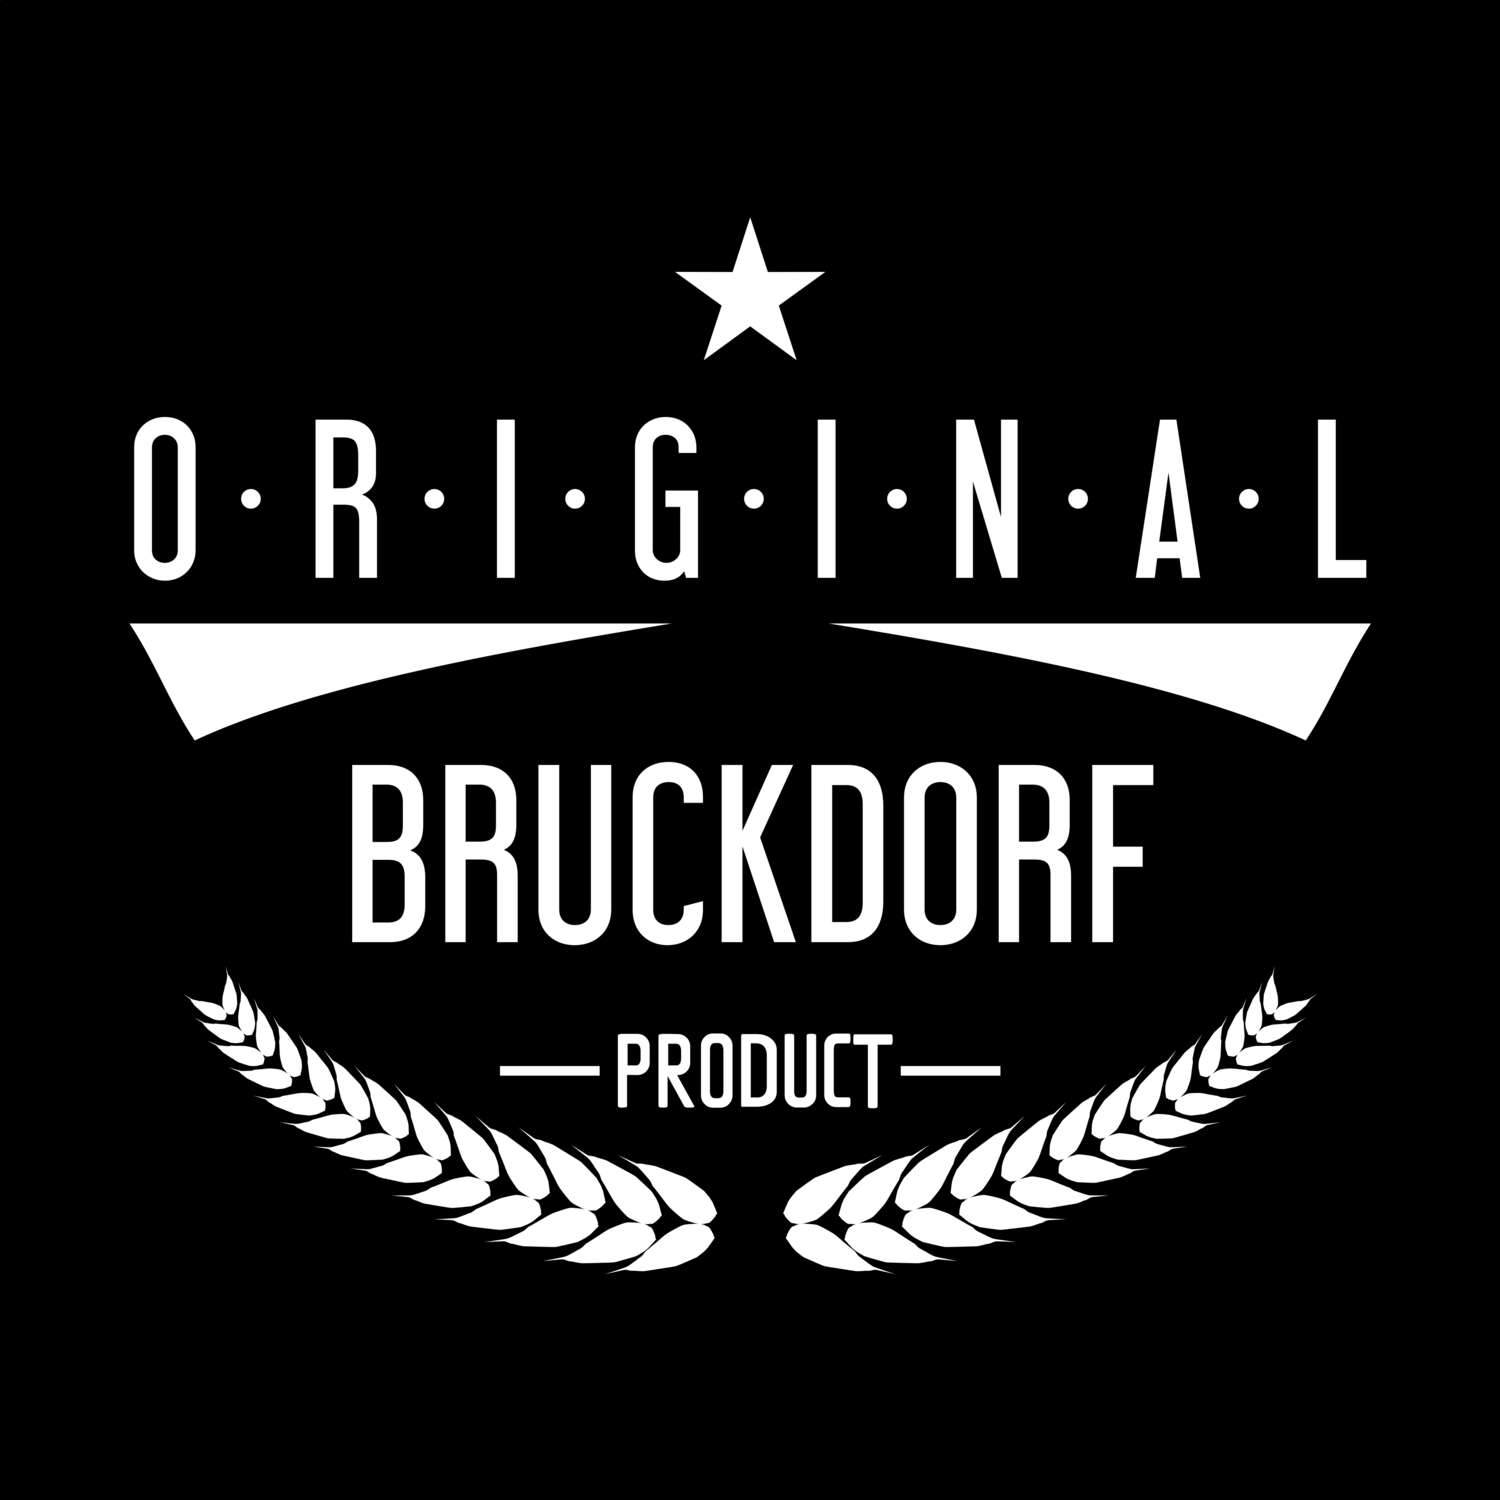 Bruckdorf T-Shirt »Original Product«